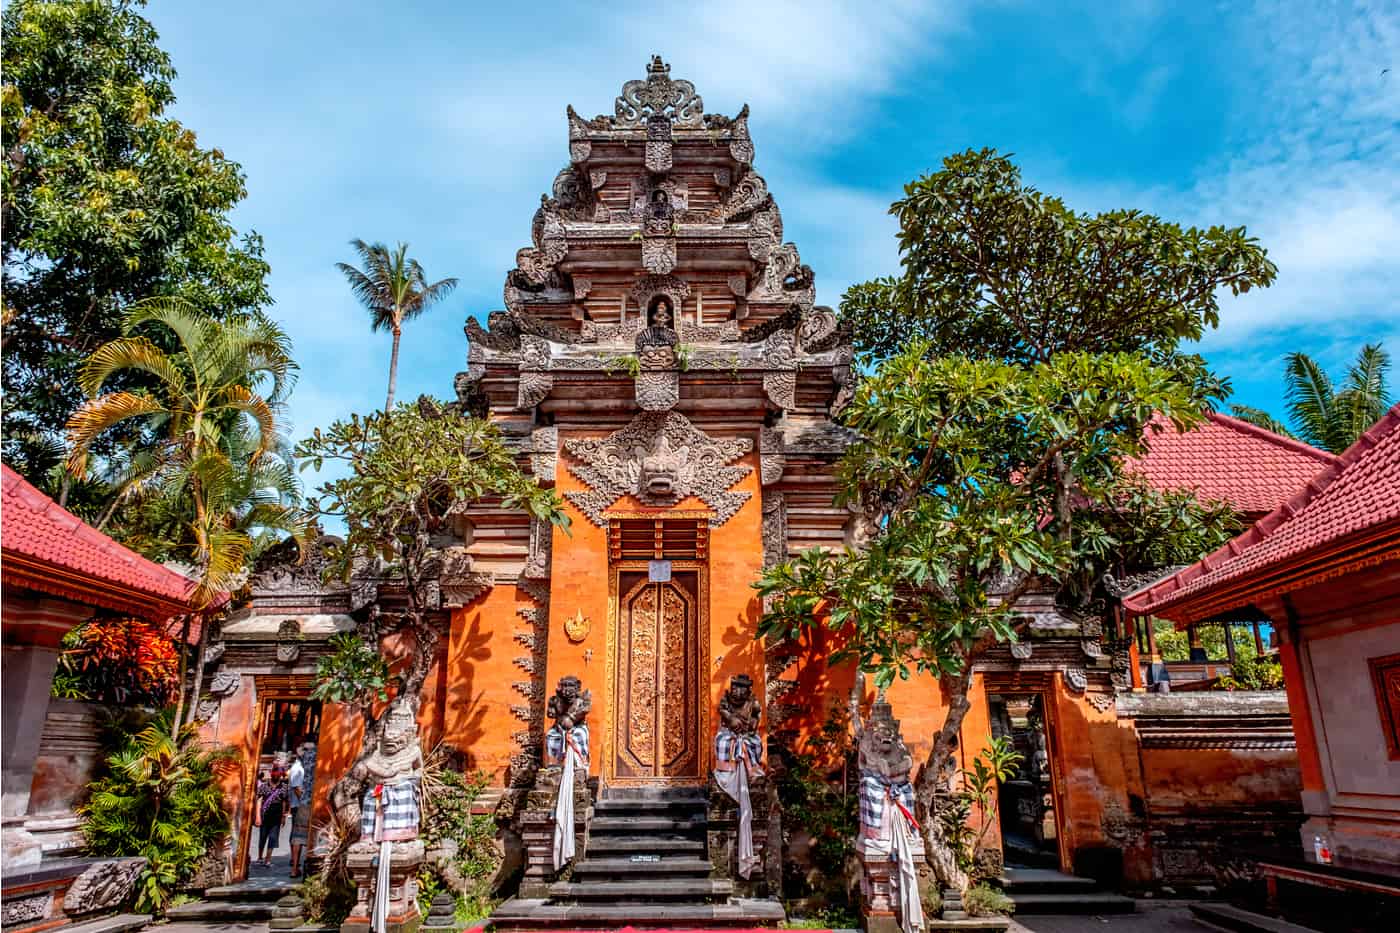 https://www.neverendingfootsteps.com/wp-content/uploads/2021/11/Ubud-Royal-Palace-in-Bali.jpg